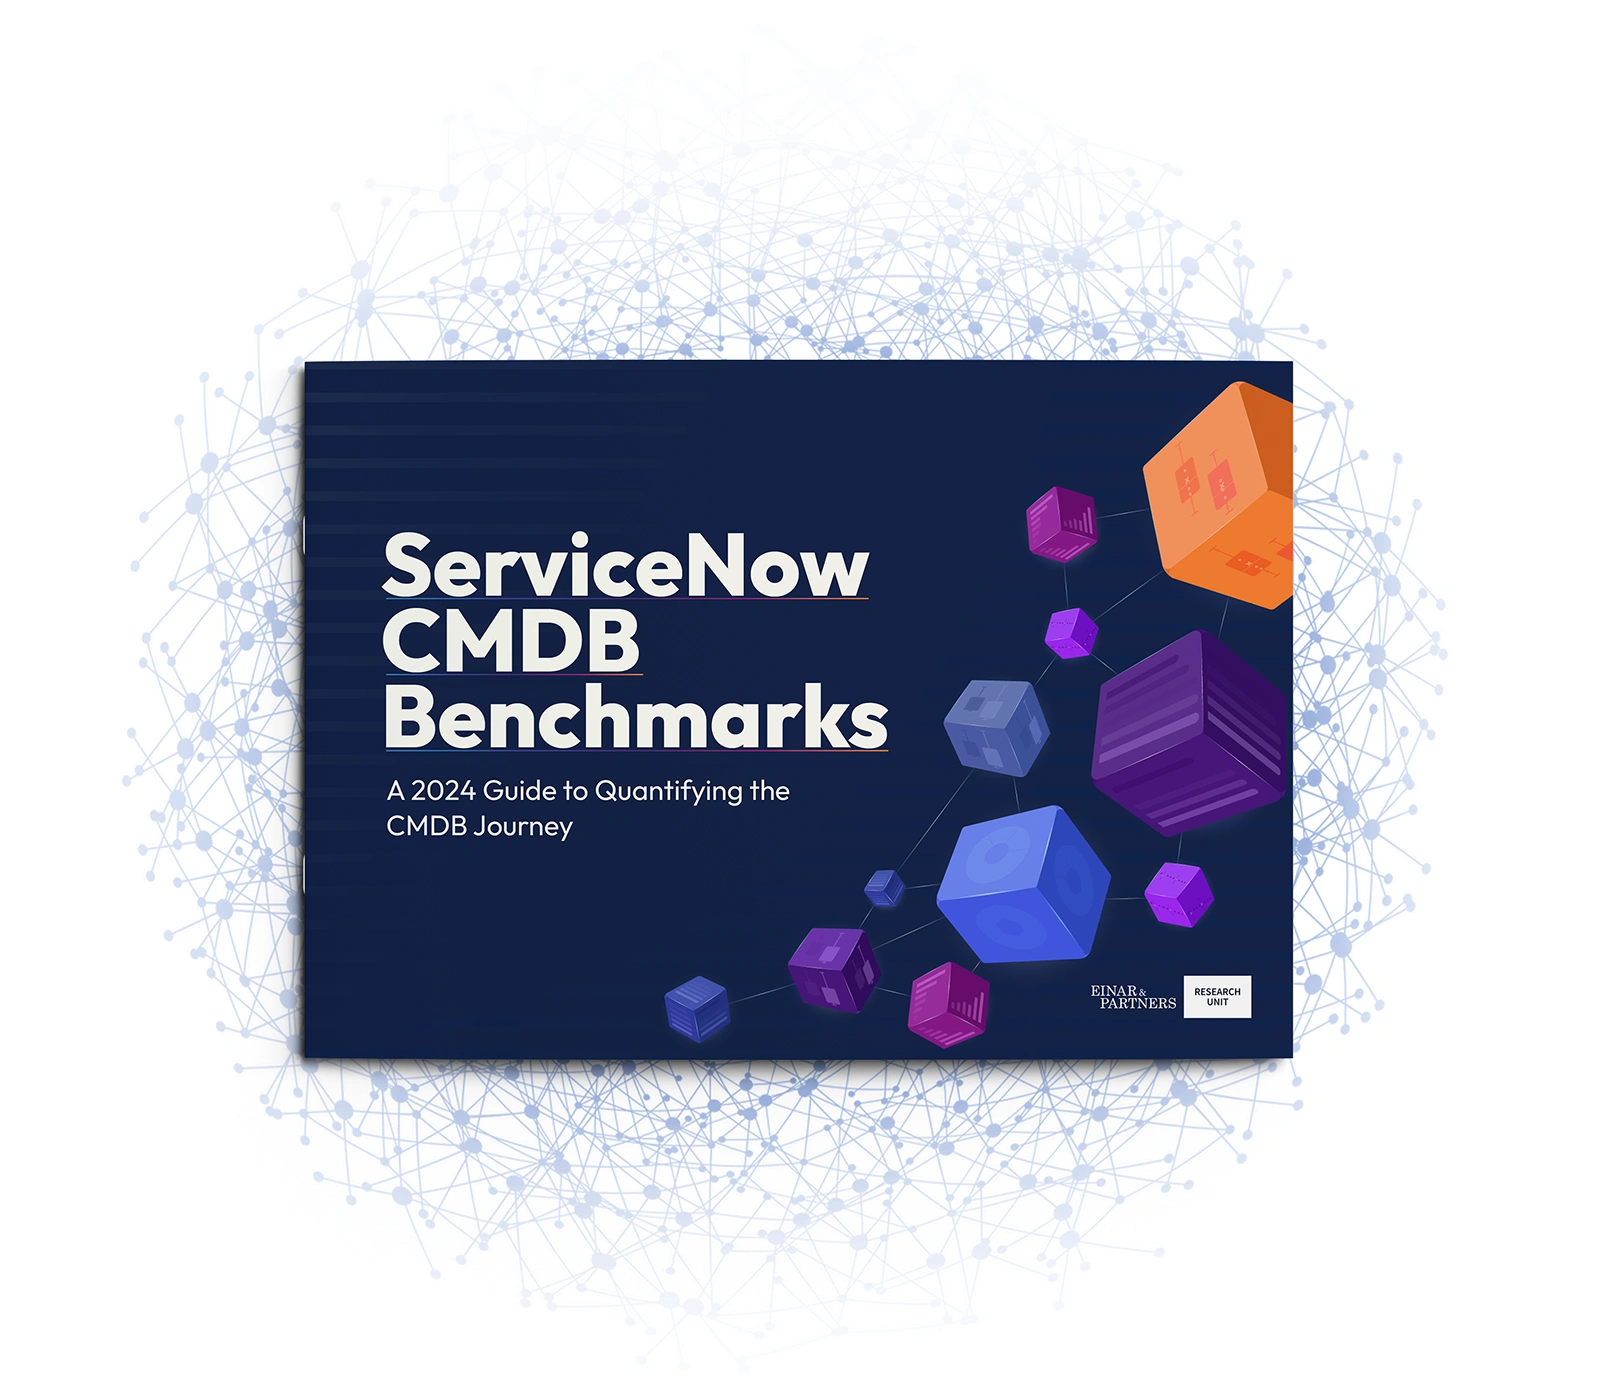 ServiceNow CMDB Implementation Benchmarks Einar Partners 2024